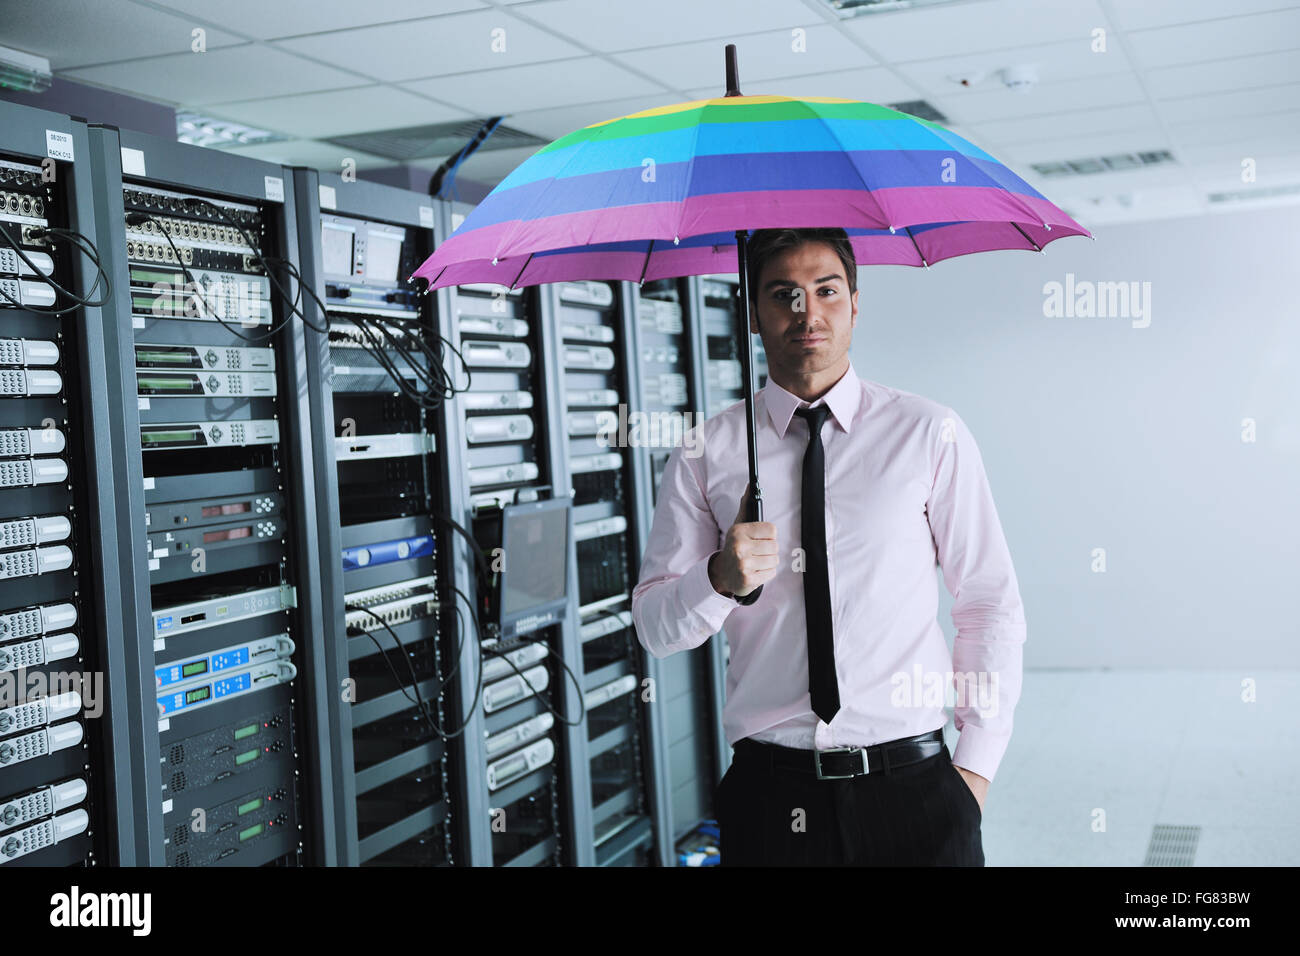 businessman hold umbrella in server room Stock Photo